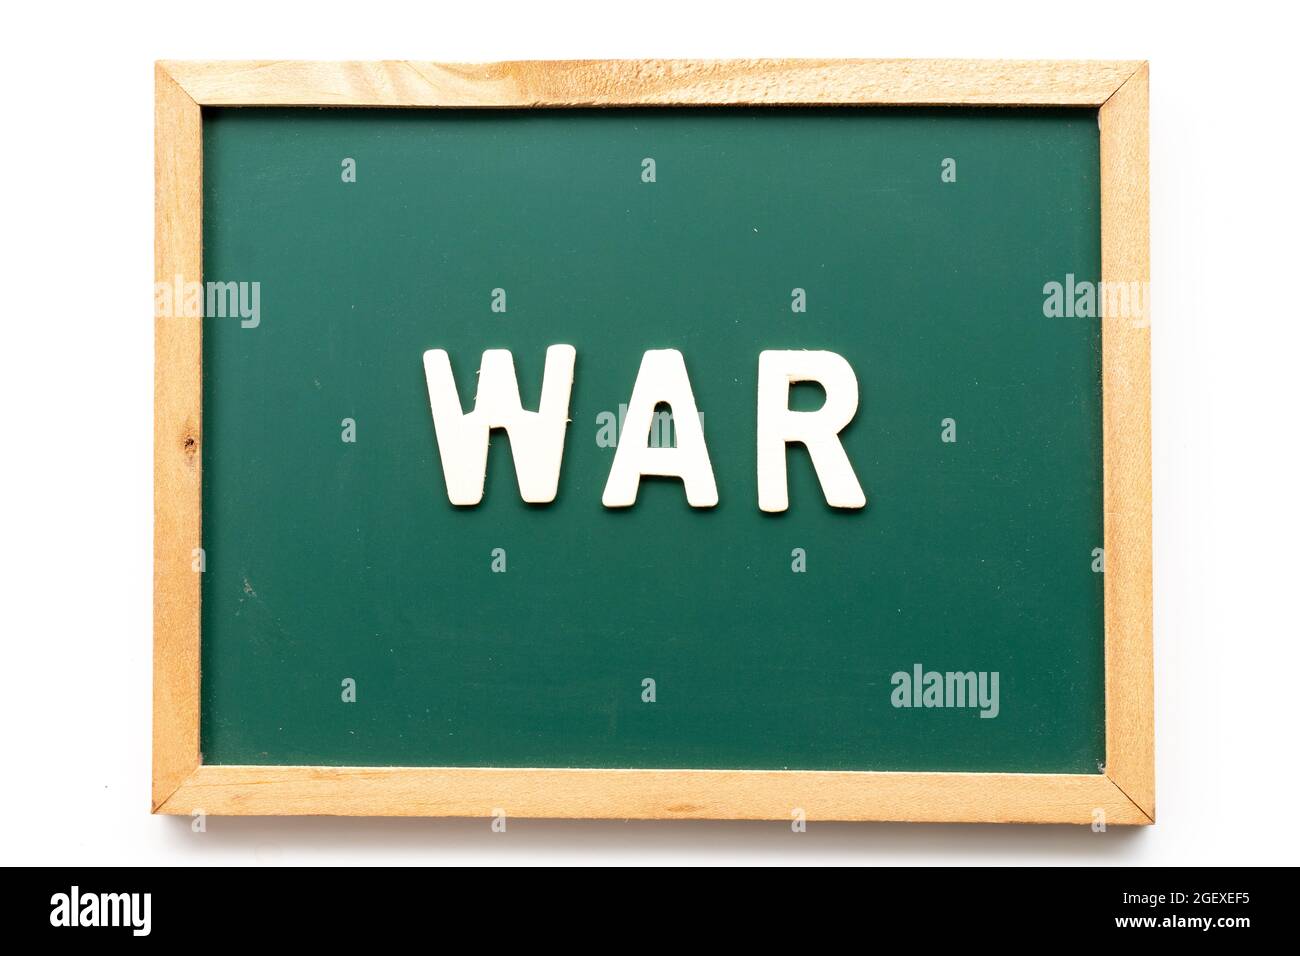 Alphabet letter in word war in blackboard on white background Stock Photo